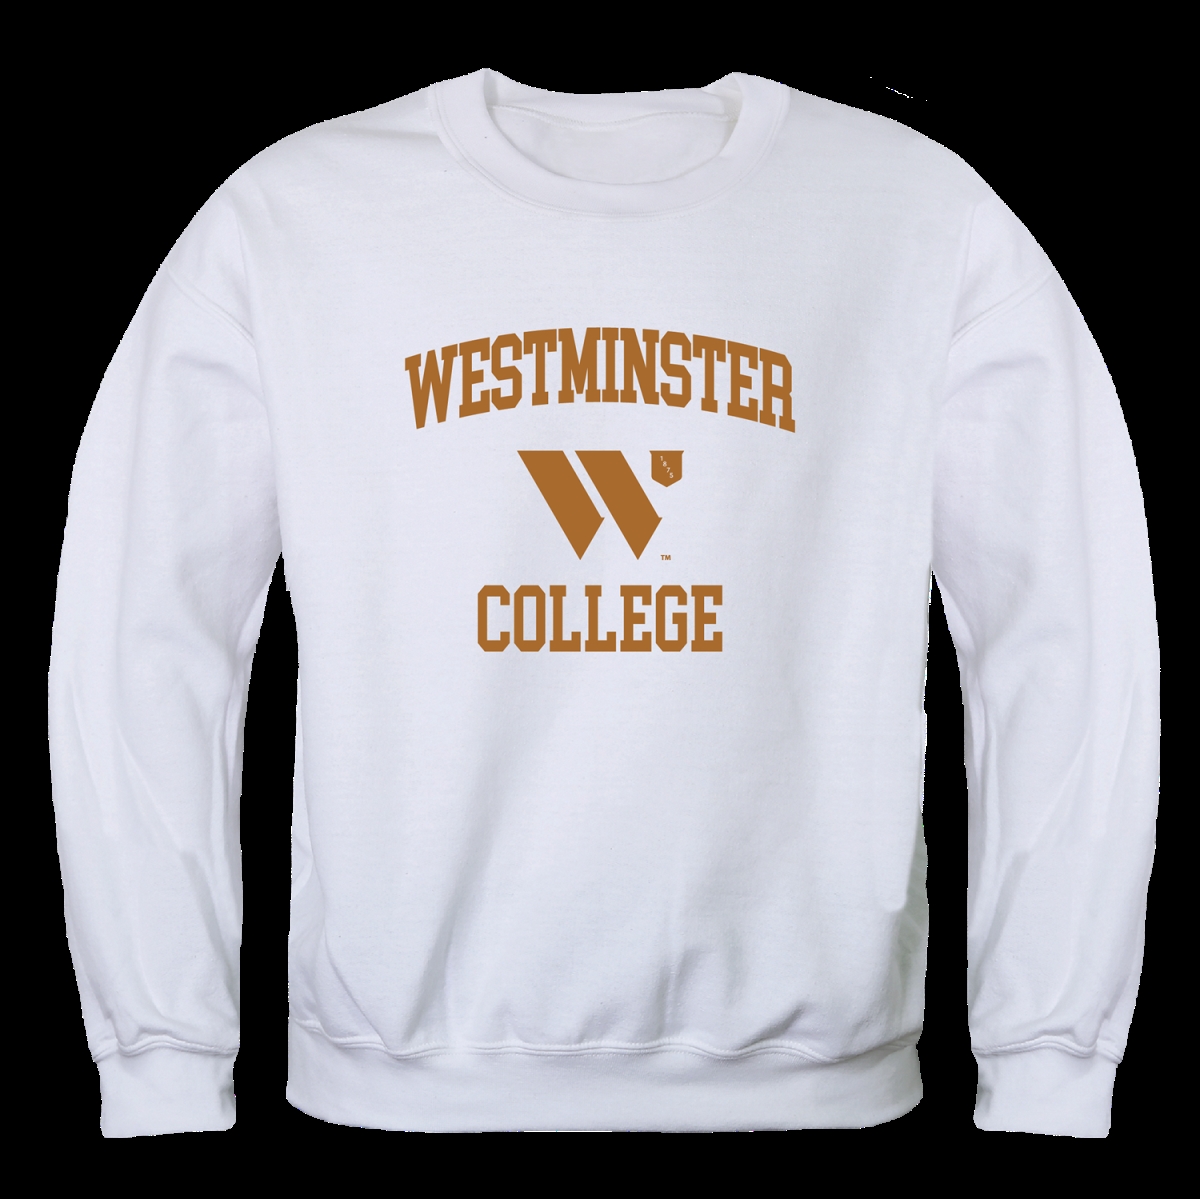 W Republic 568-421-WHT-02 Westminster College Griffins Seal Crewneck Sweatshirt&#44; White - Medium